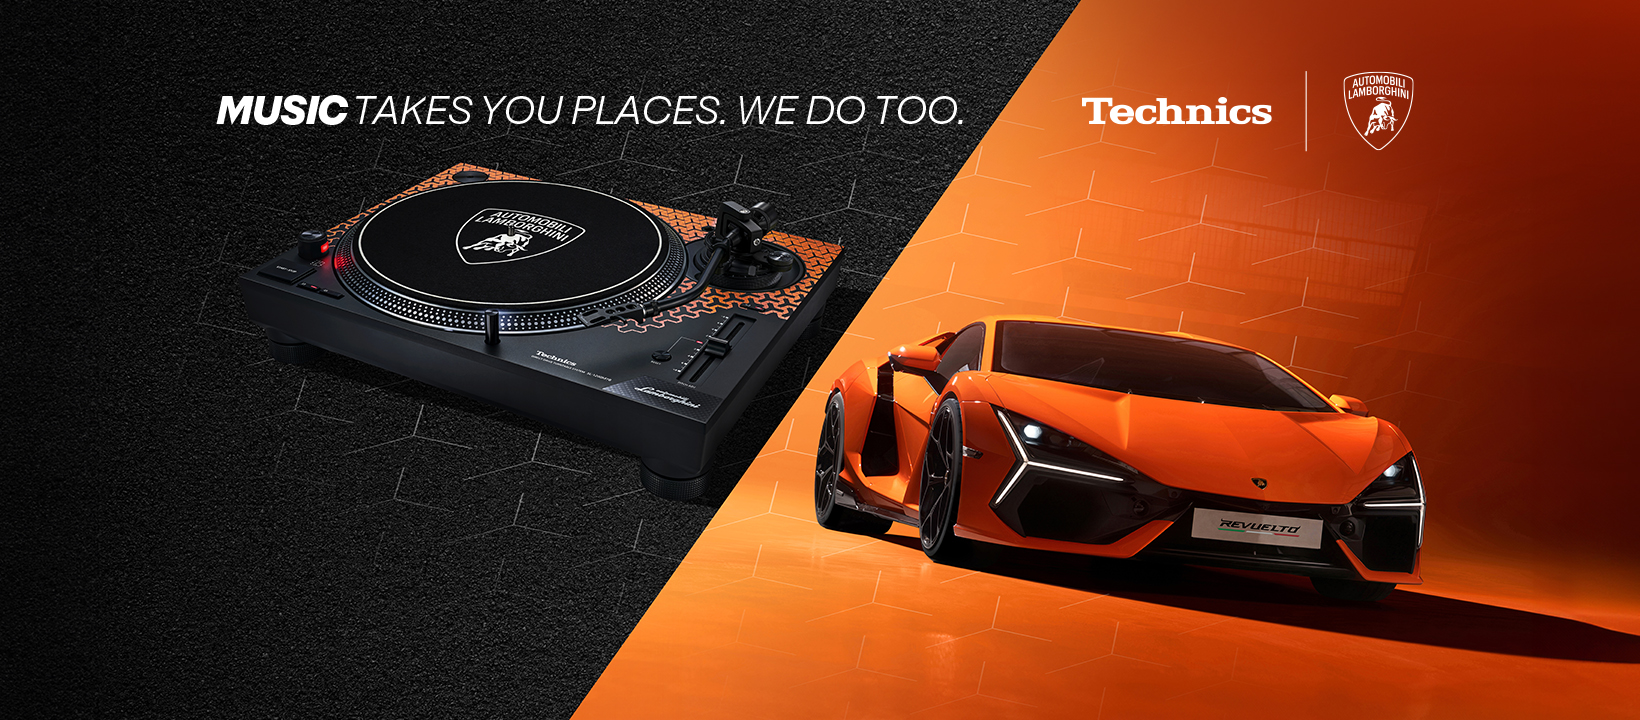 Technics DJ Decks | Technics Turntable | Techincs Headphones